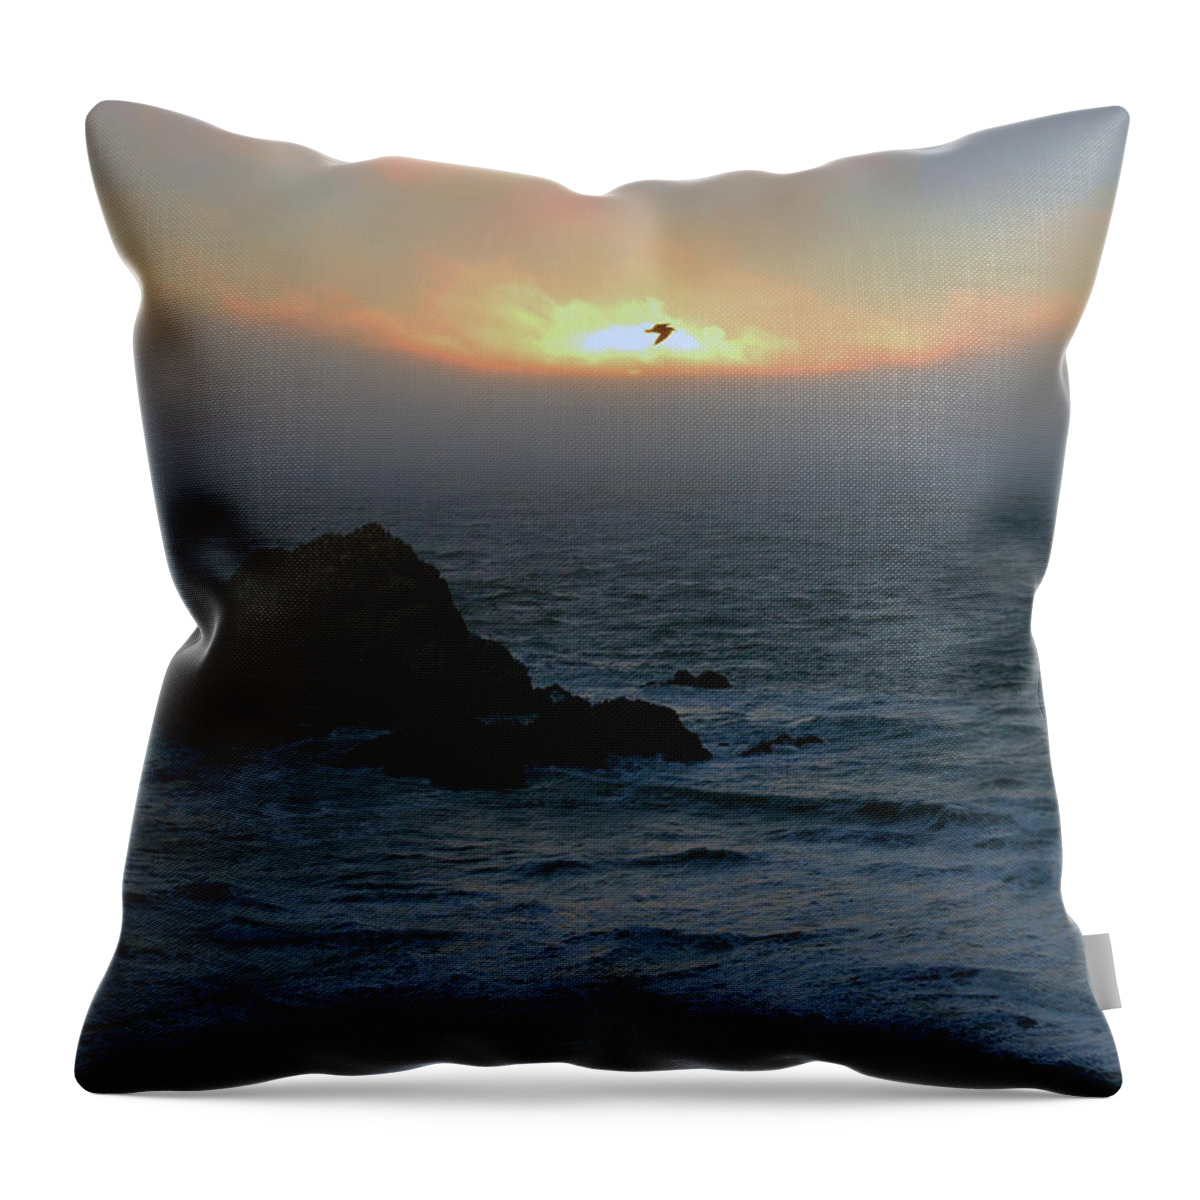 Bird Throw Pillow featuring the photograph Sunset with the bird by Dragan Kudjerski